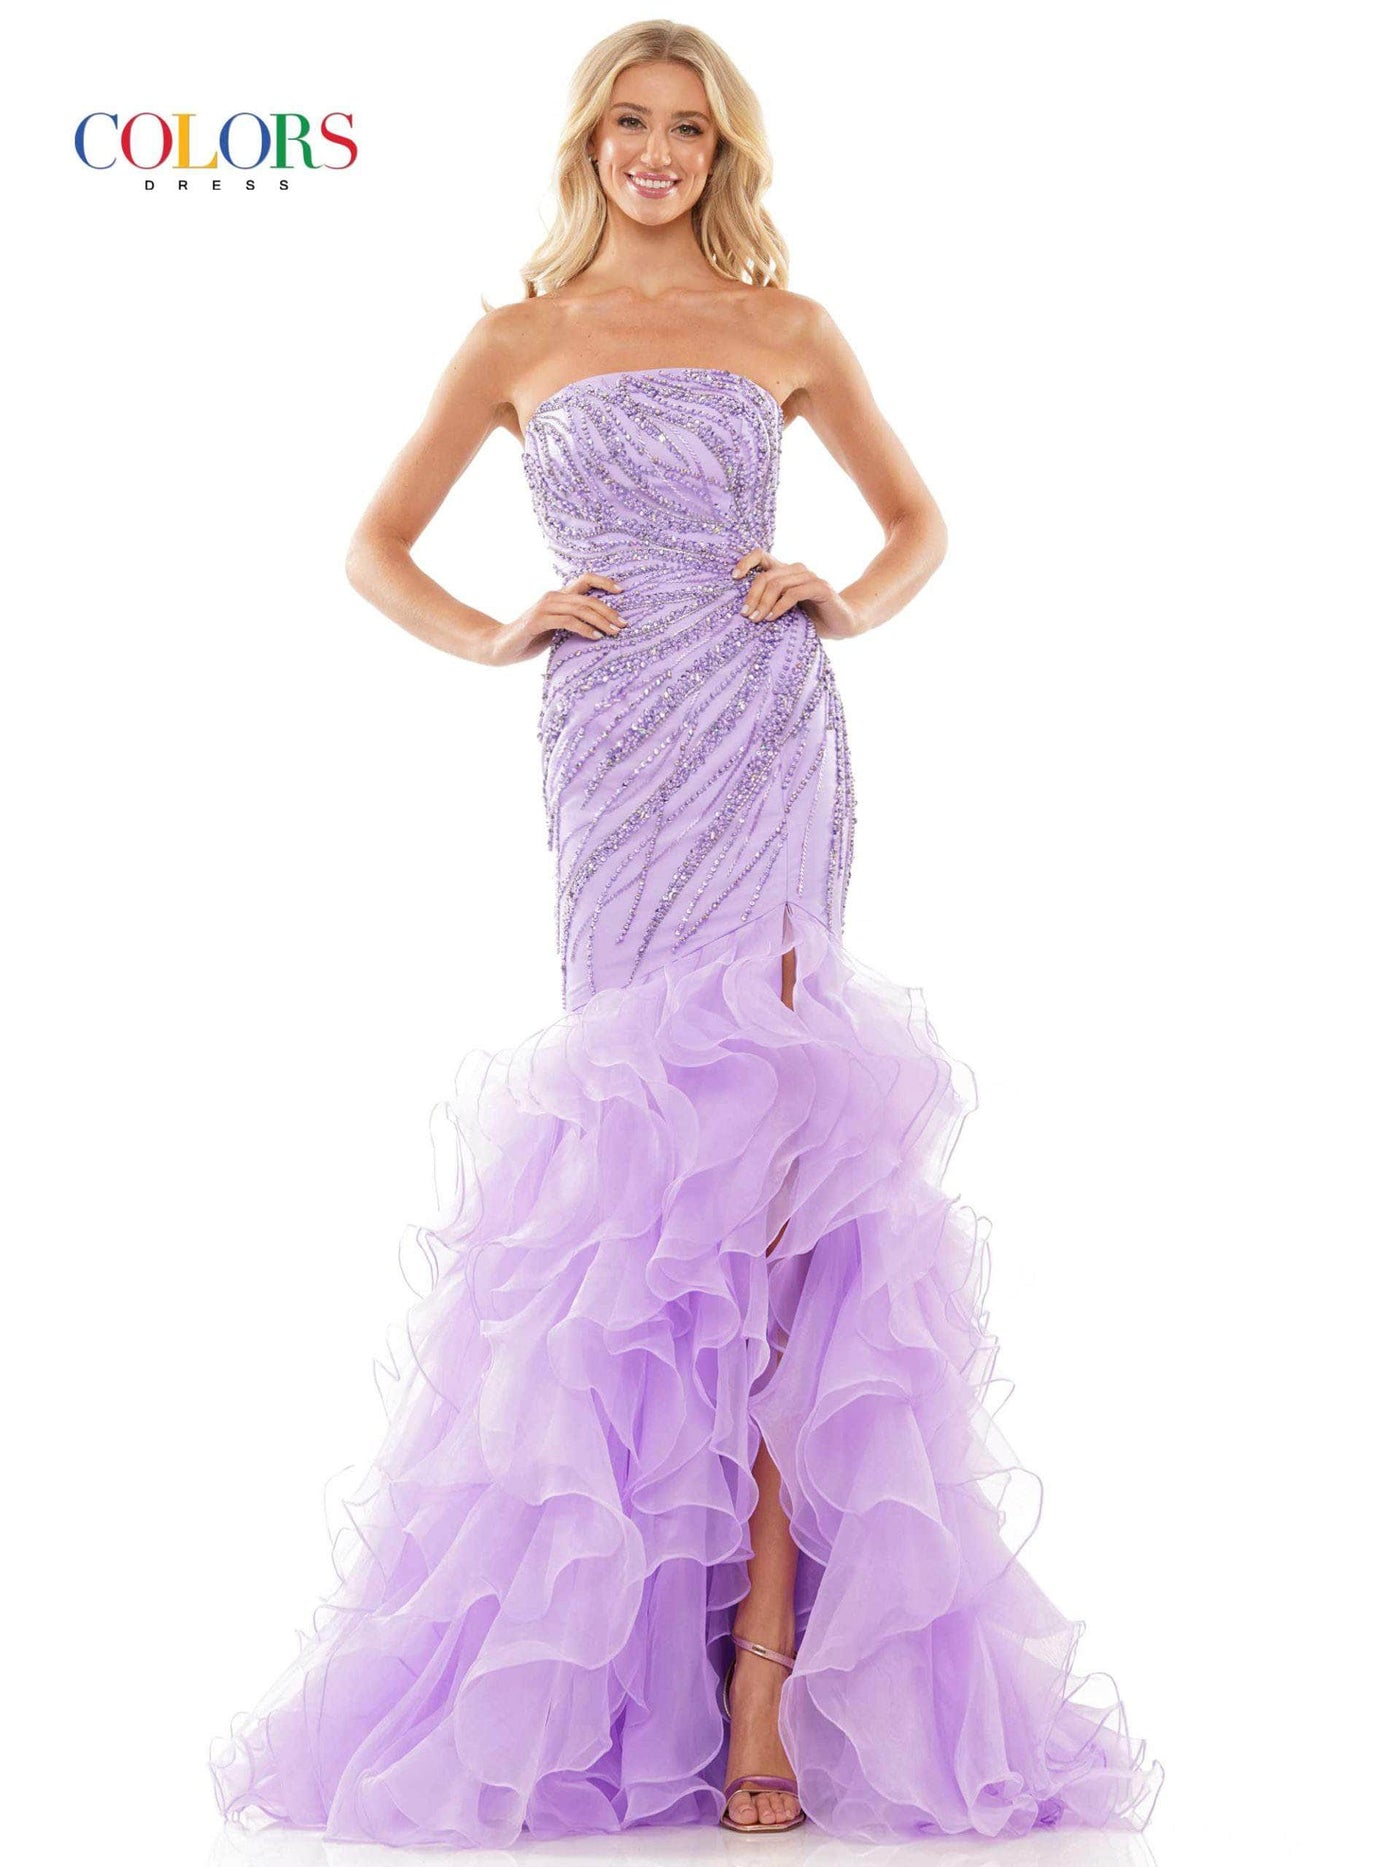 Colors Dress 2926 - Mermaid Gown